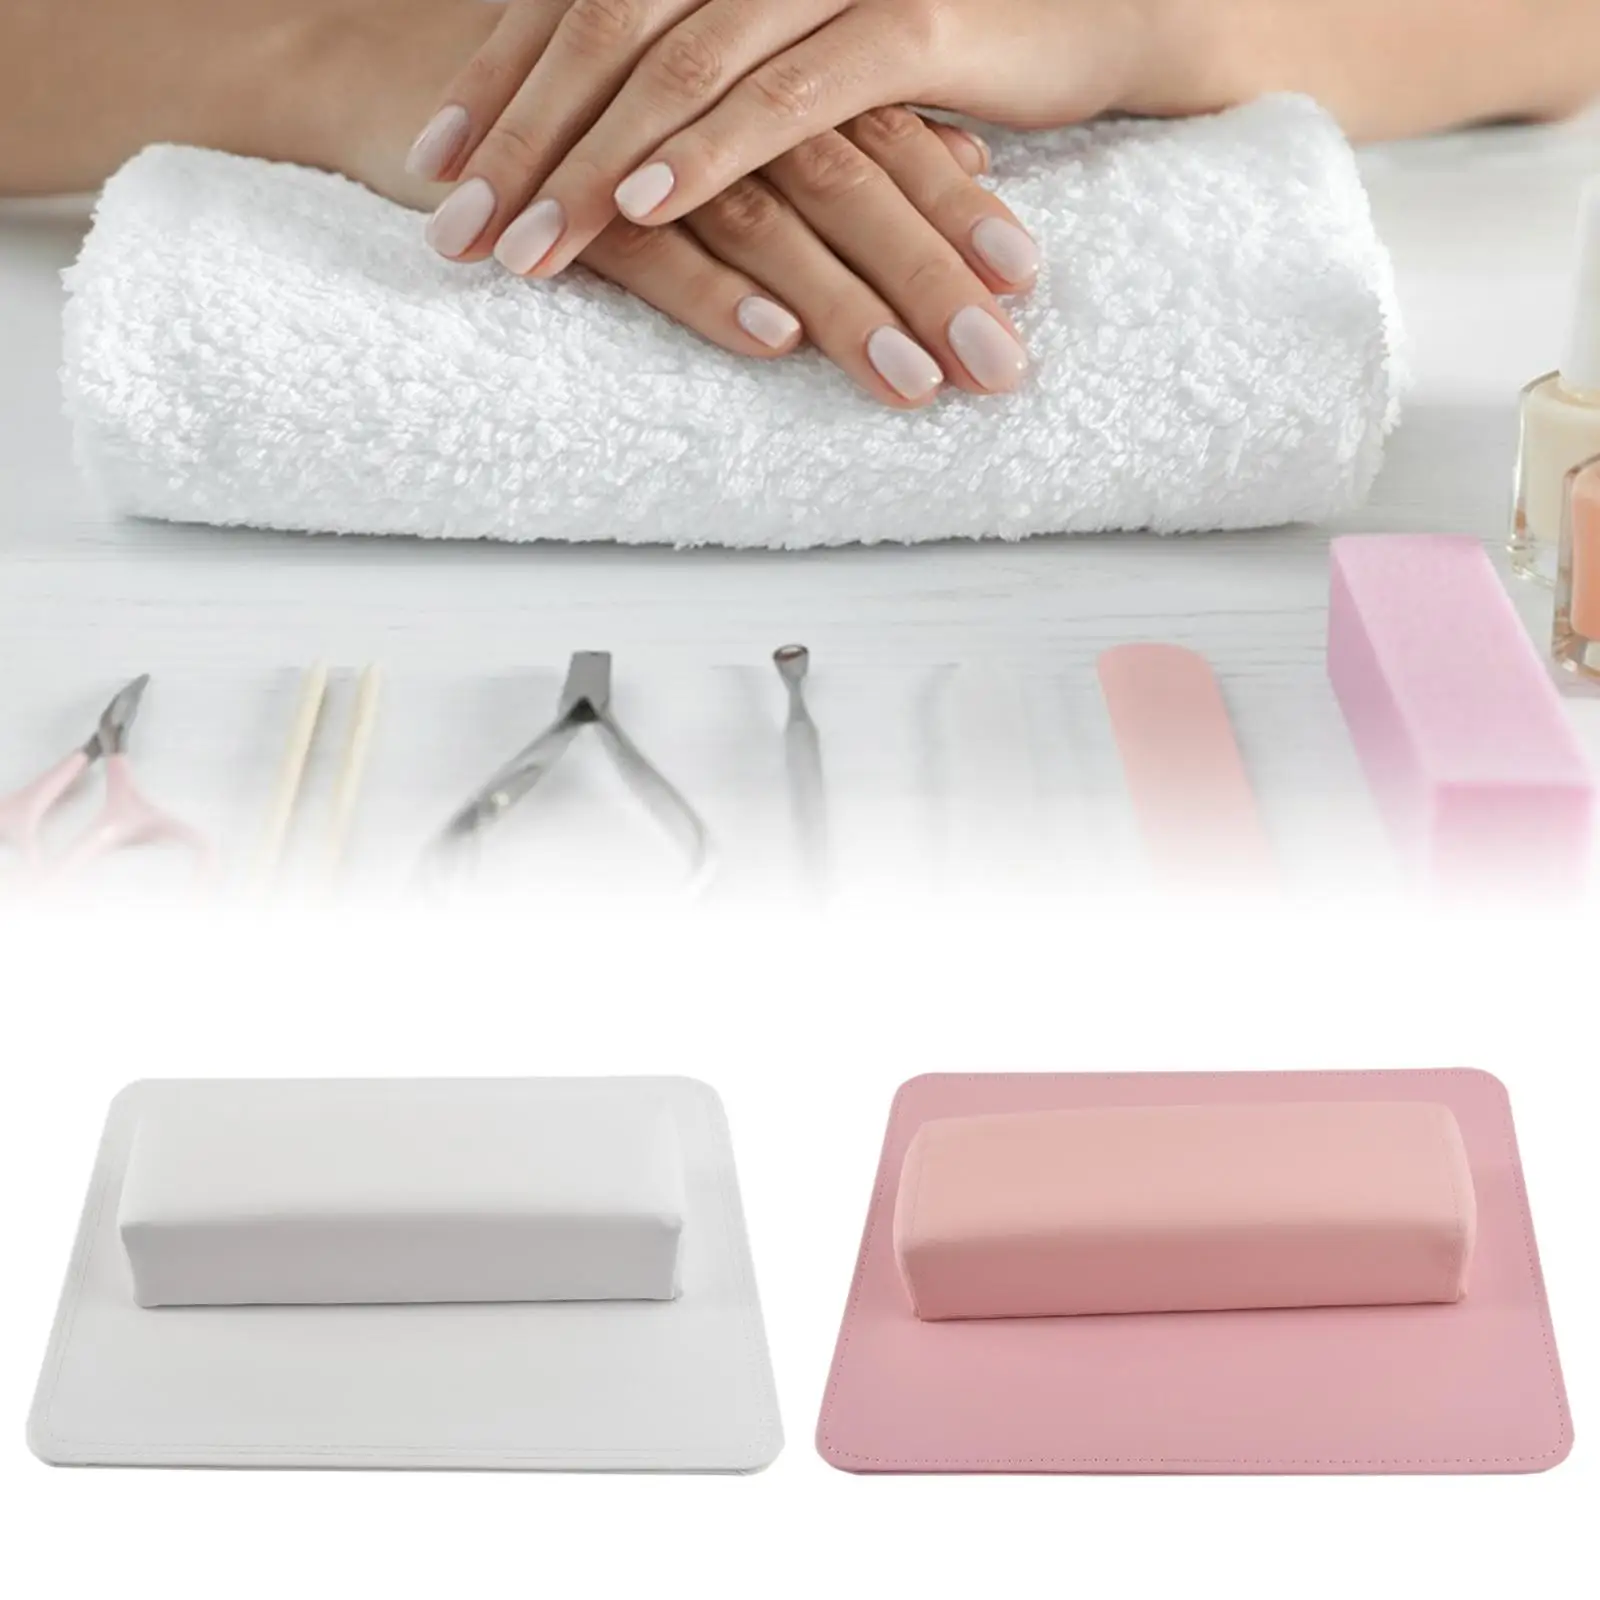 Nail Art Hand Pillow and Mat PU Leather Nail Art Cushion Mat Set Manicure Tool Nail Hand Rest Cushion for Home Salon Manicurist